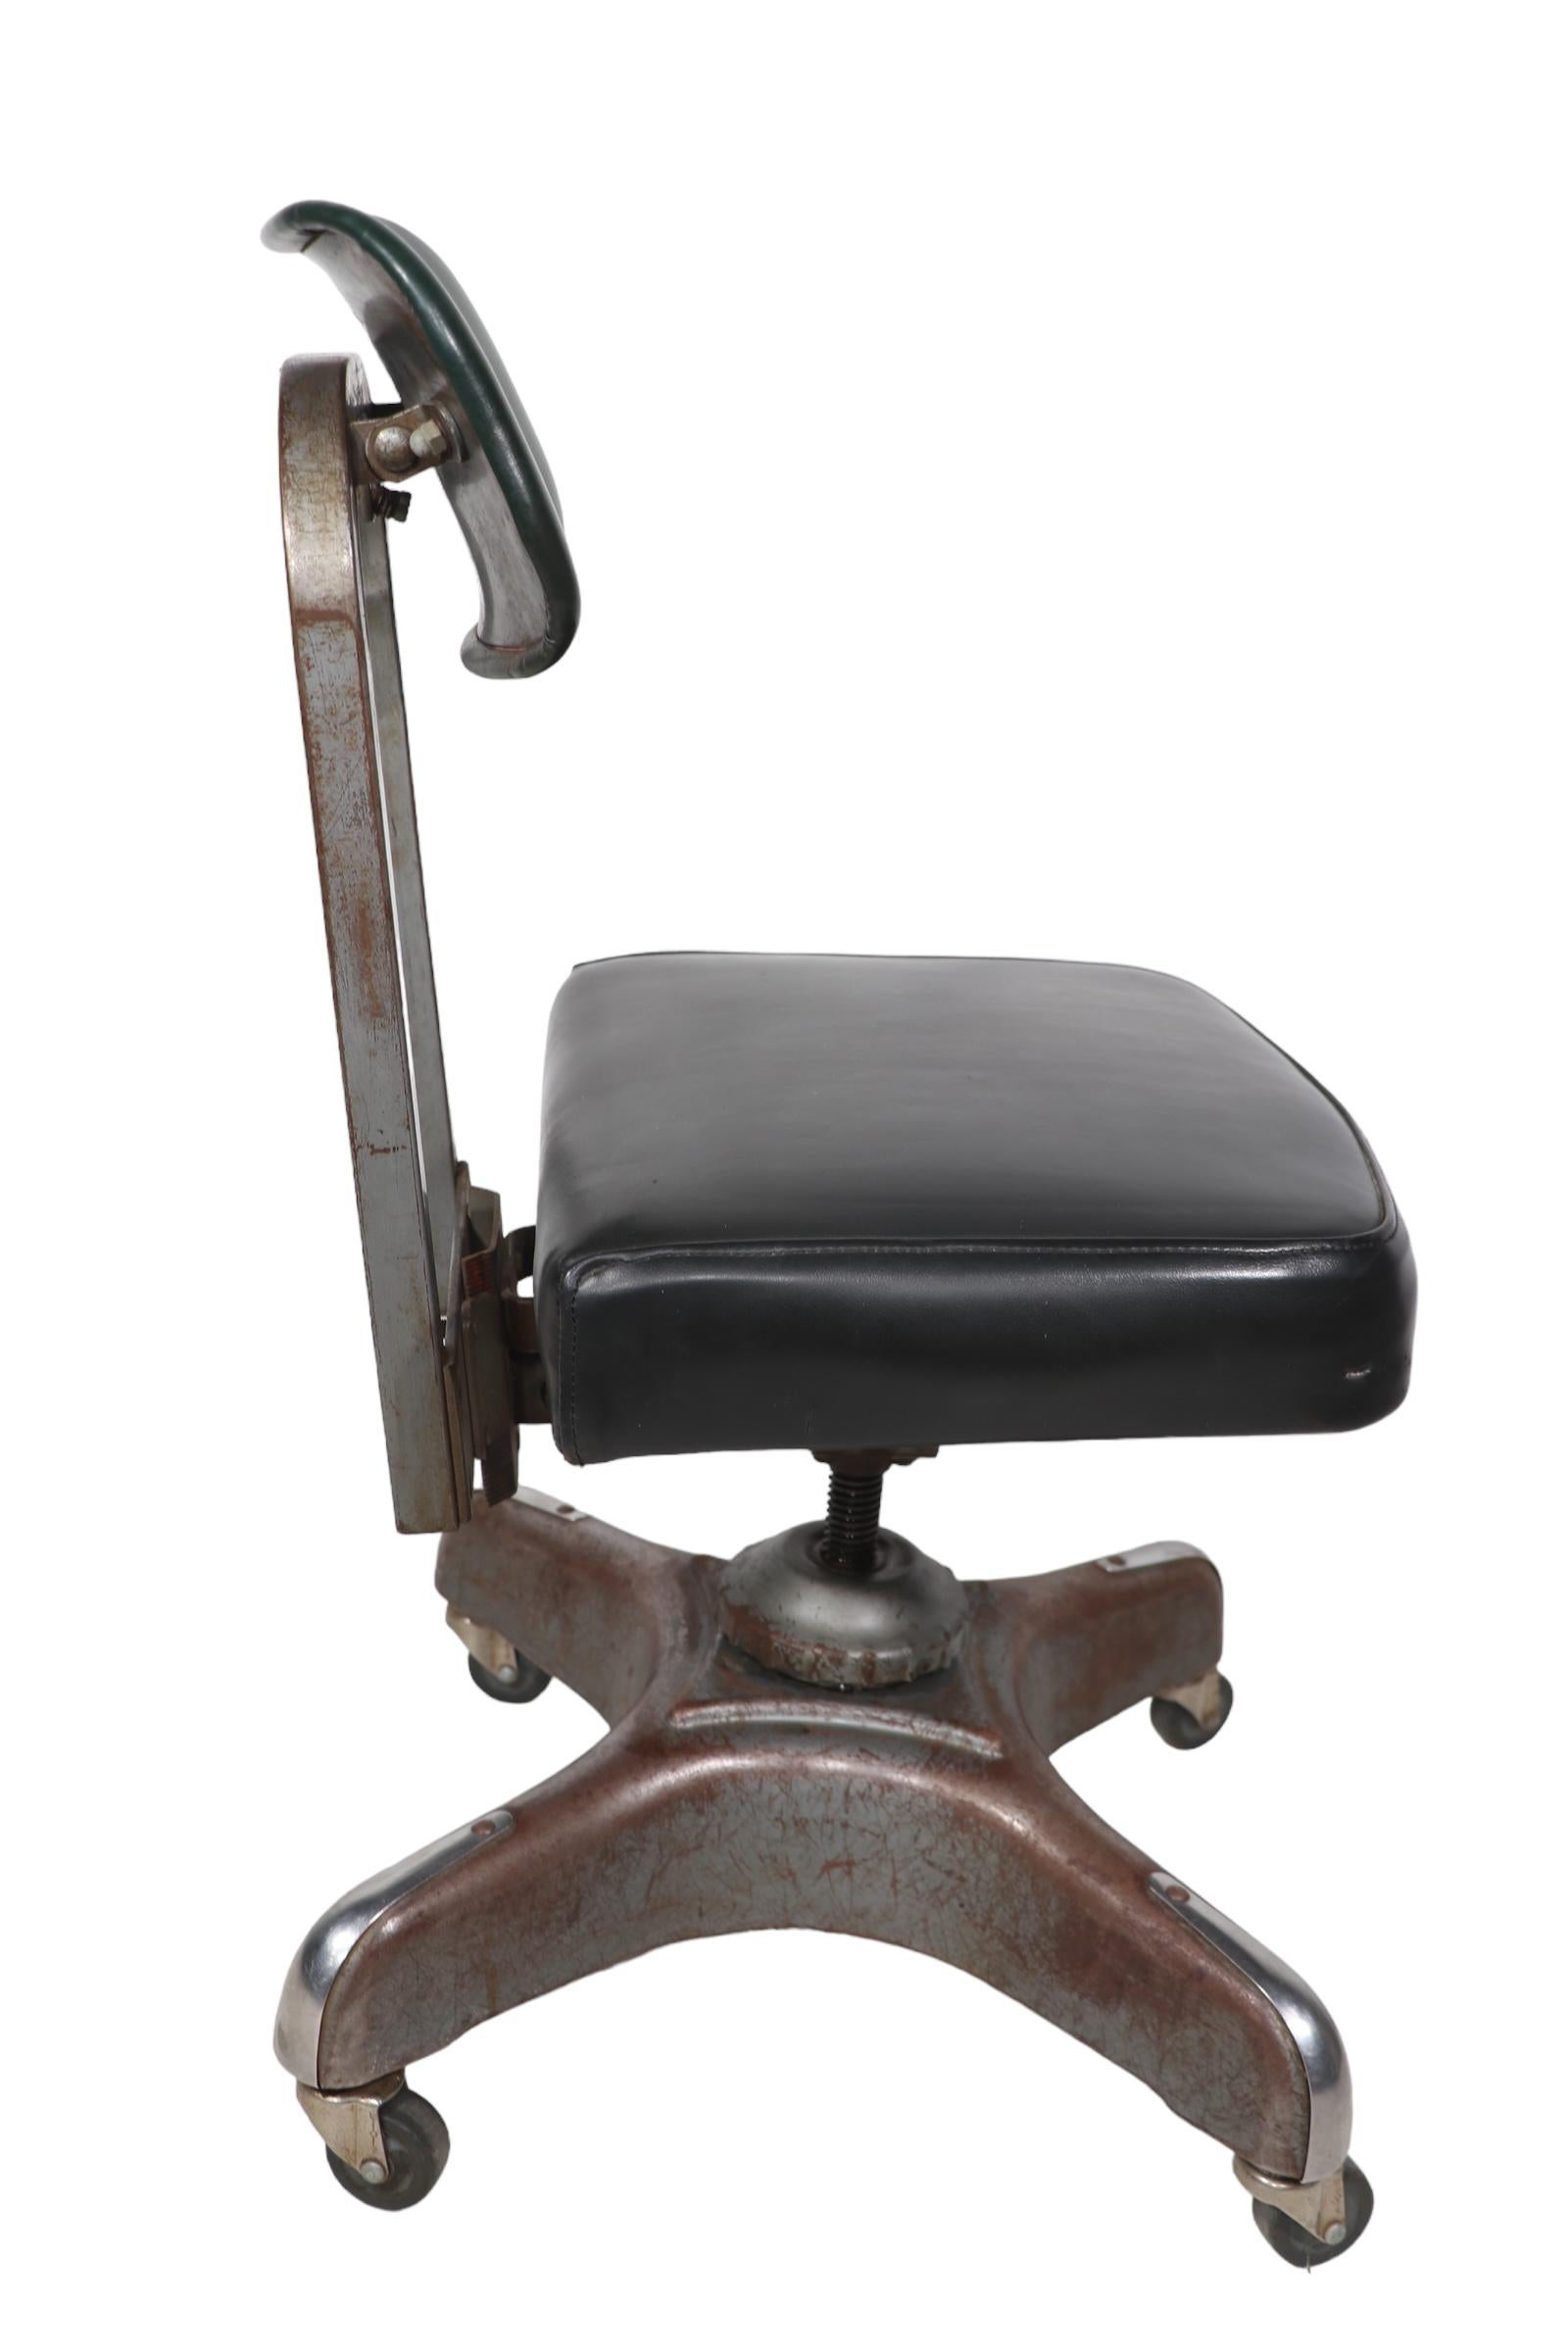 Art Deco Industrial Swivel Tilt Armless Desk Chair by Harter Corporation 1930/40 For Sale 4